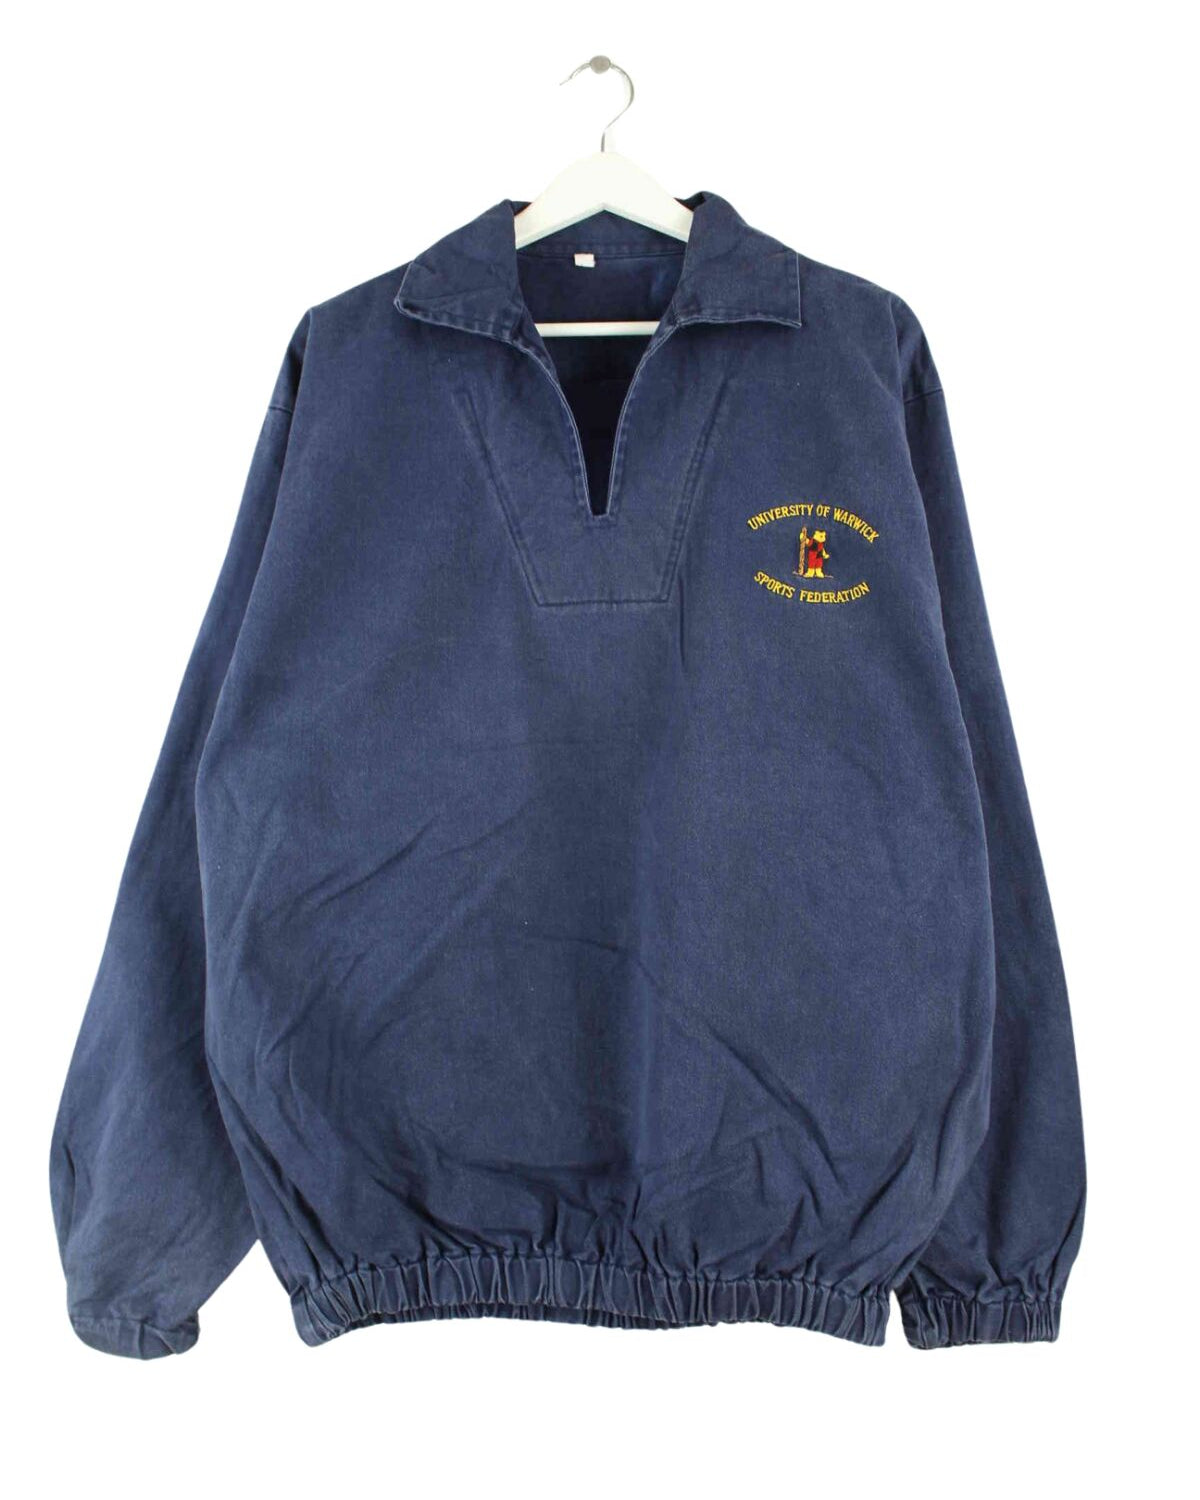 Vintage 90s University Warwick Embroidered Jacke Blau L (front image)